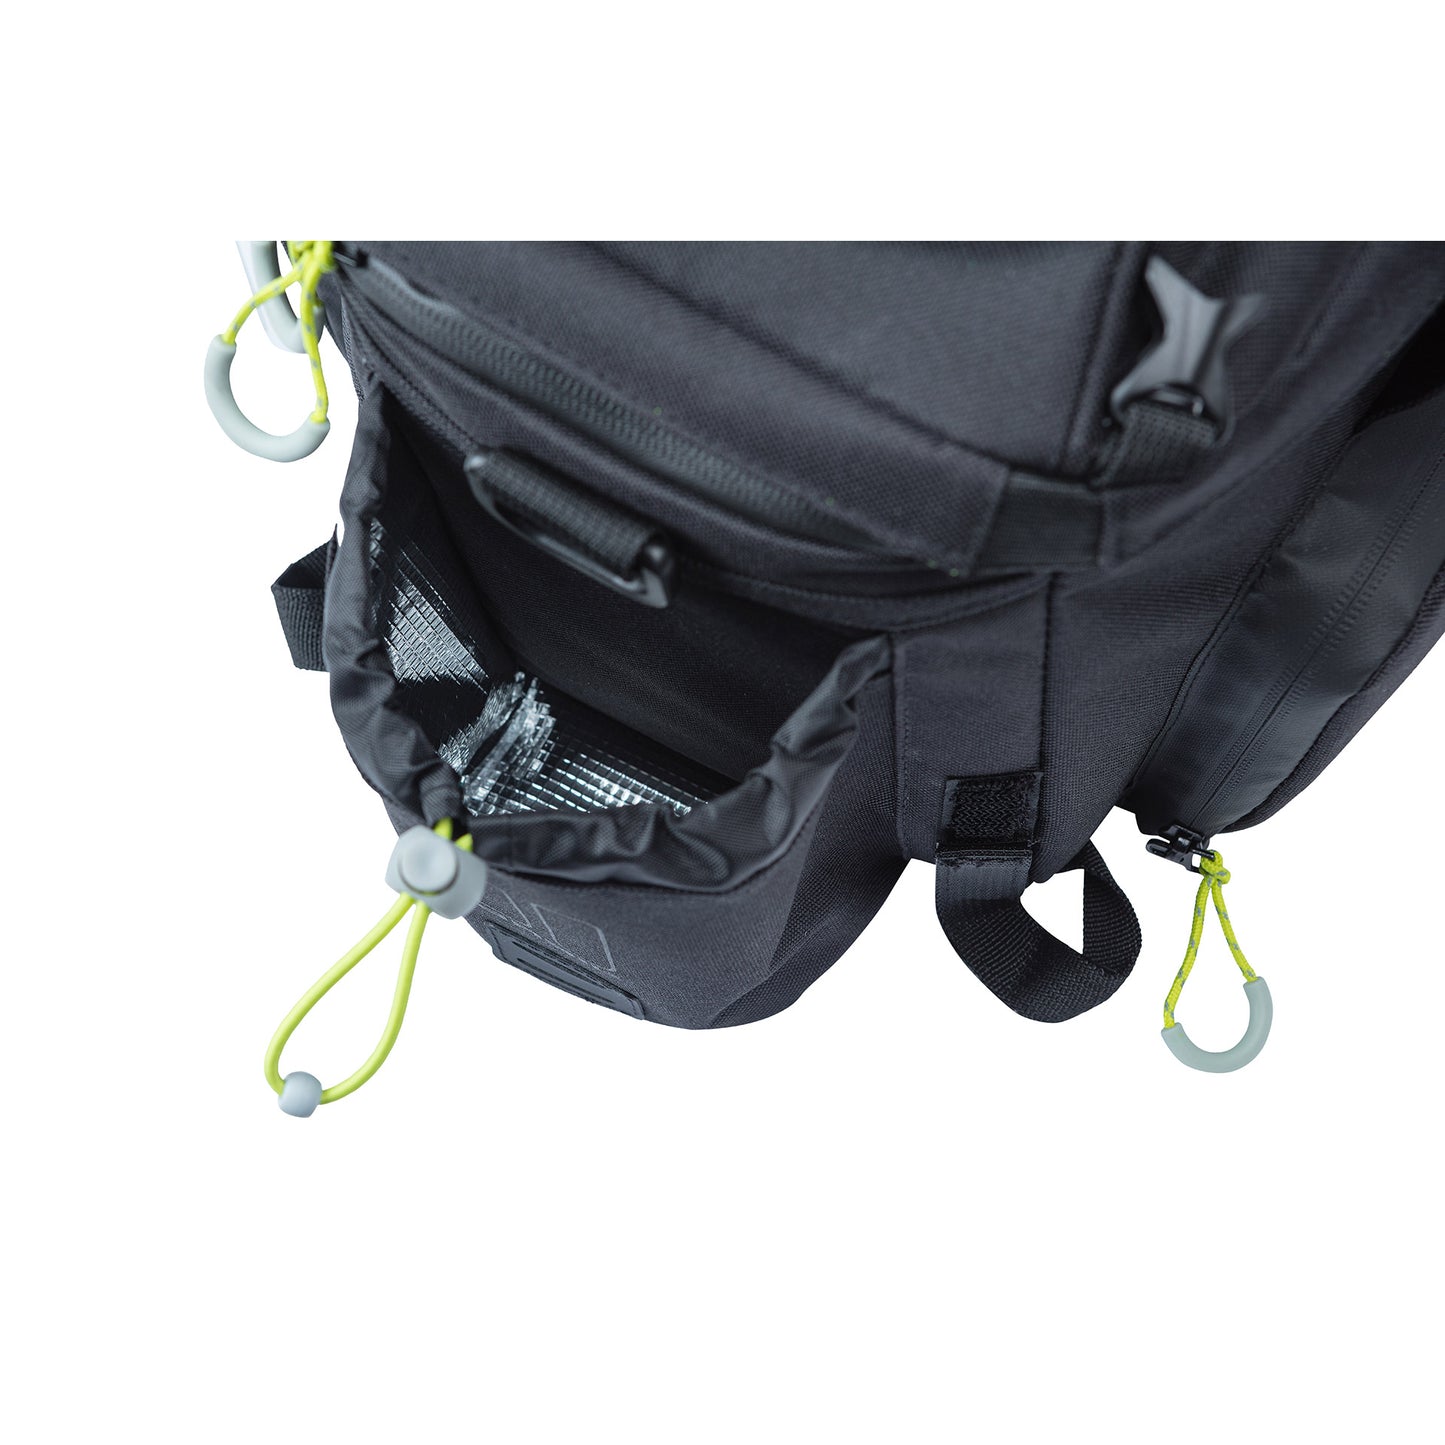 Basil Miles XL Pro bagagedragertas - waterdicht - sportief - zwart lime - 9-36L - MIK RT adapterplaten